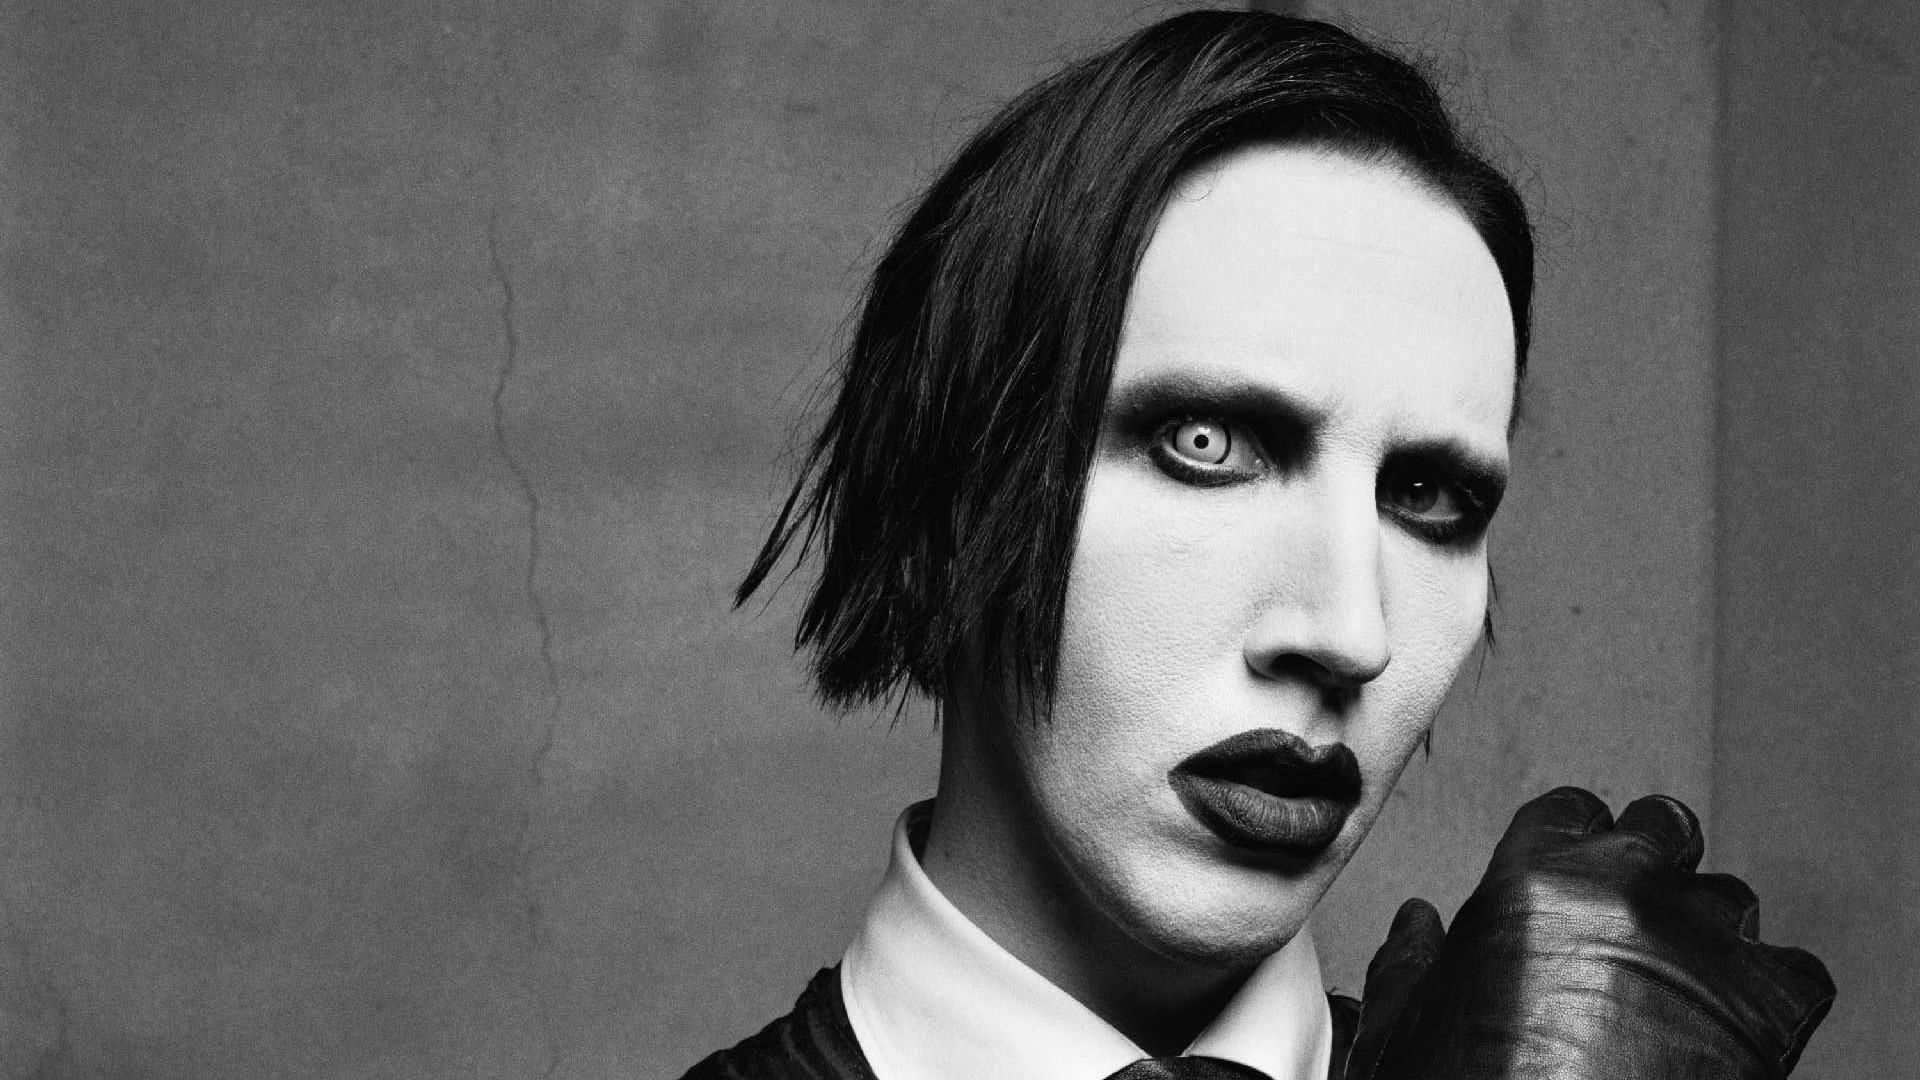 HD Quality Marilyn Manson Wallpaper Widescreen 14 Music Celebrity